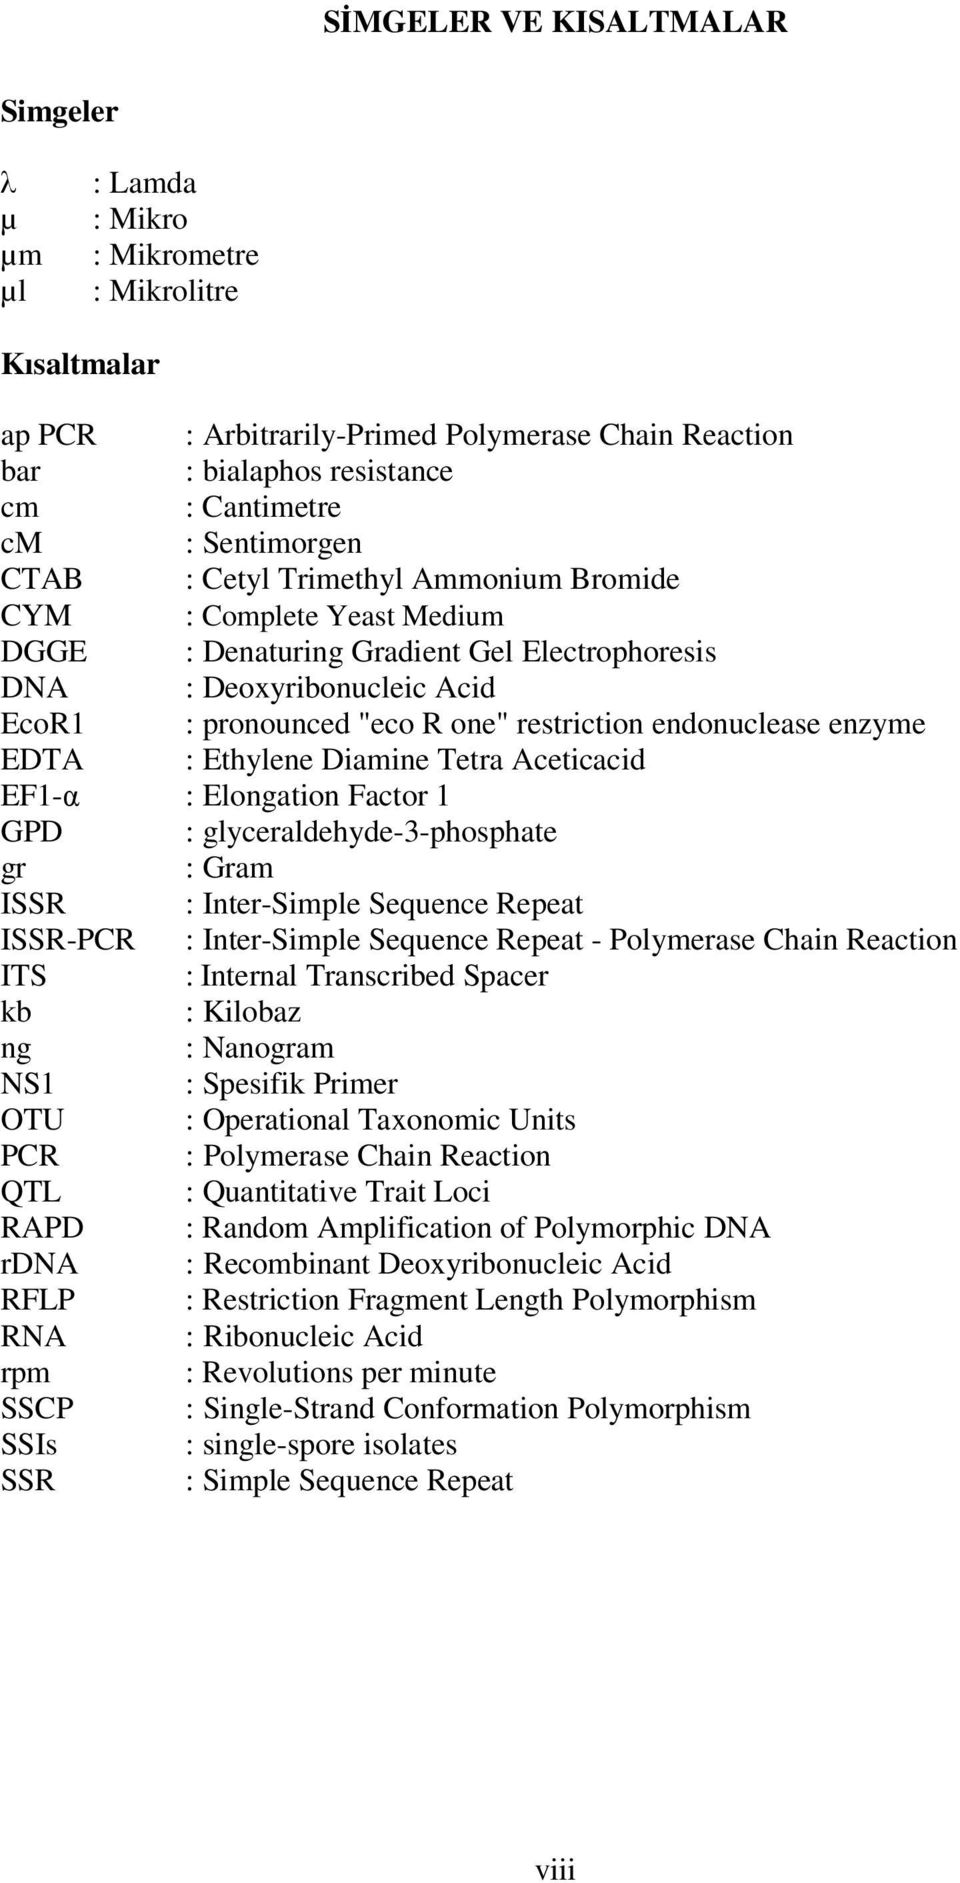 endonuclease enzyme EDTA : Ethylene Diamine Tetra Aceticacid EF1-α : Elongation Factor 1 GPD : glyceraldehyde-3-phosphate gr : Gram ISSR : Inter-Simple Sequence Repeat ISSR-PCR : Inter-Simple